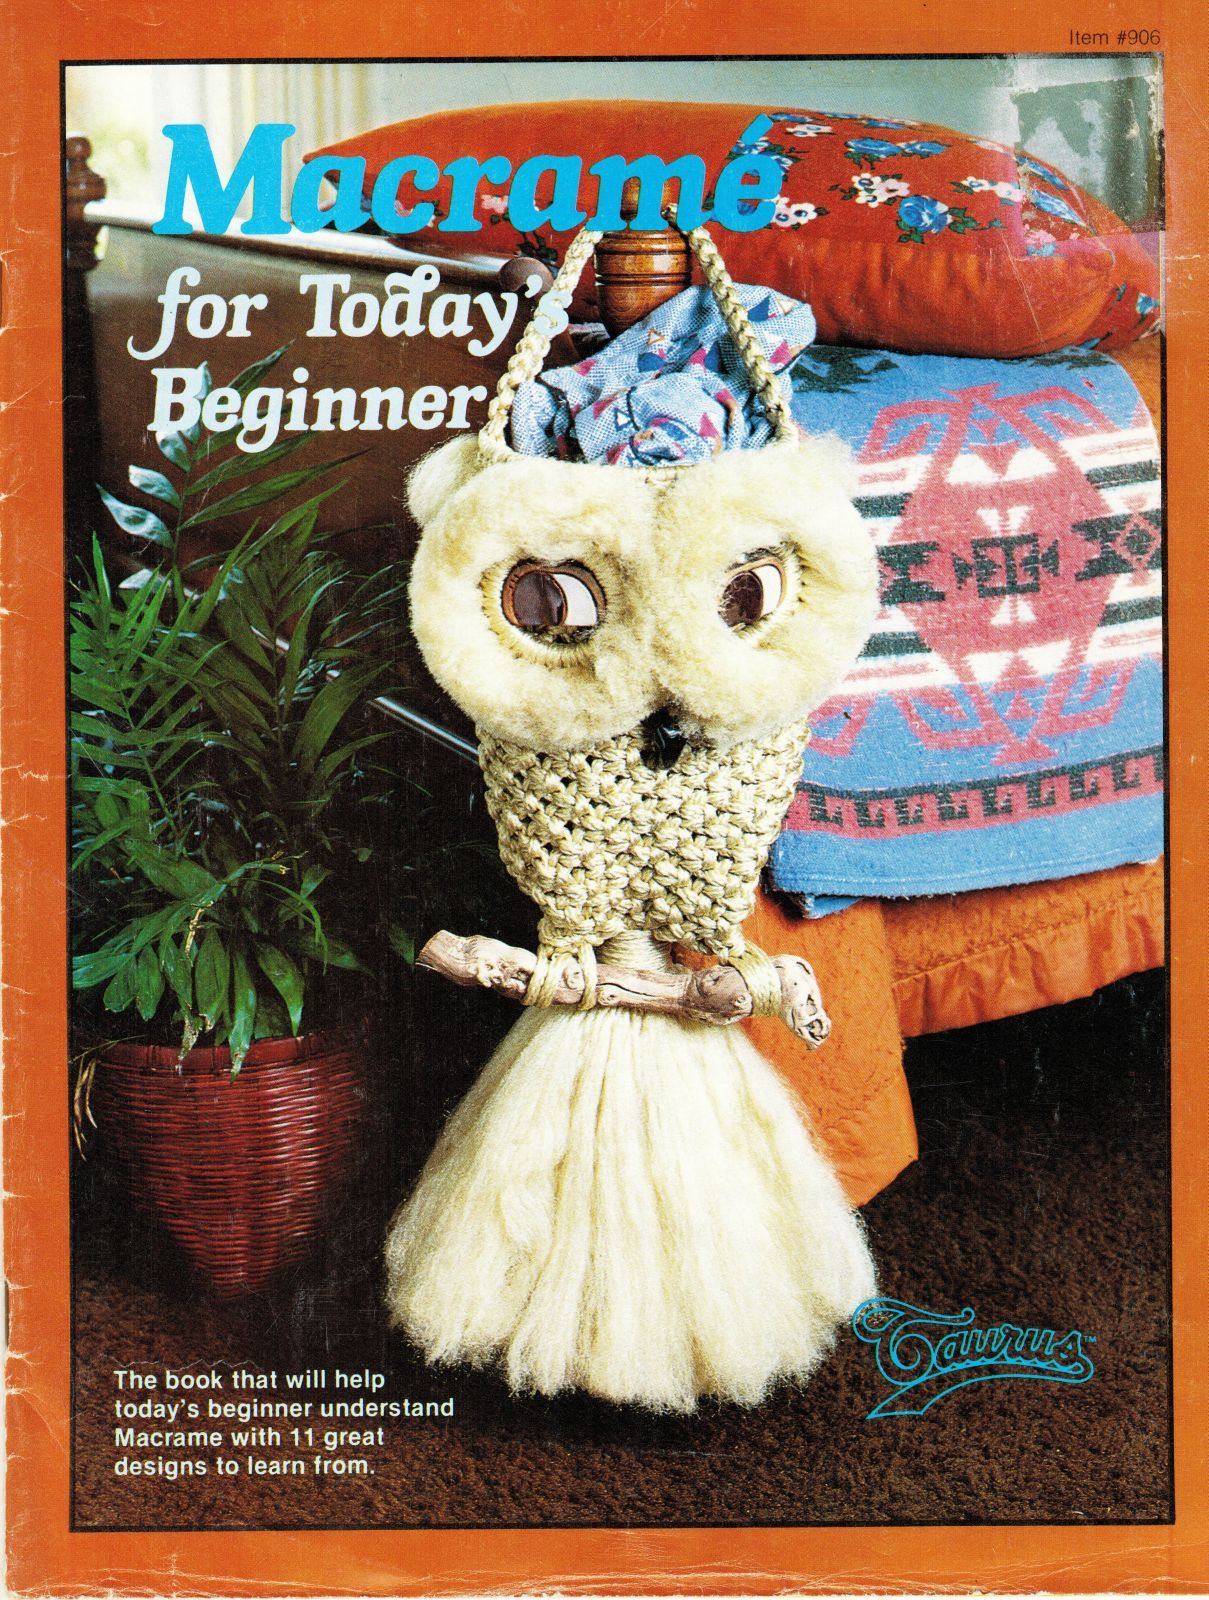 Vtg 1978 Macrame For Today's Beginner Curtain Planters Owl Spice Rack Patterns - $14.99